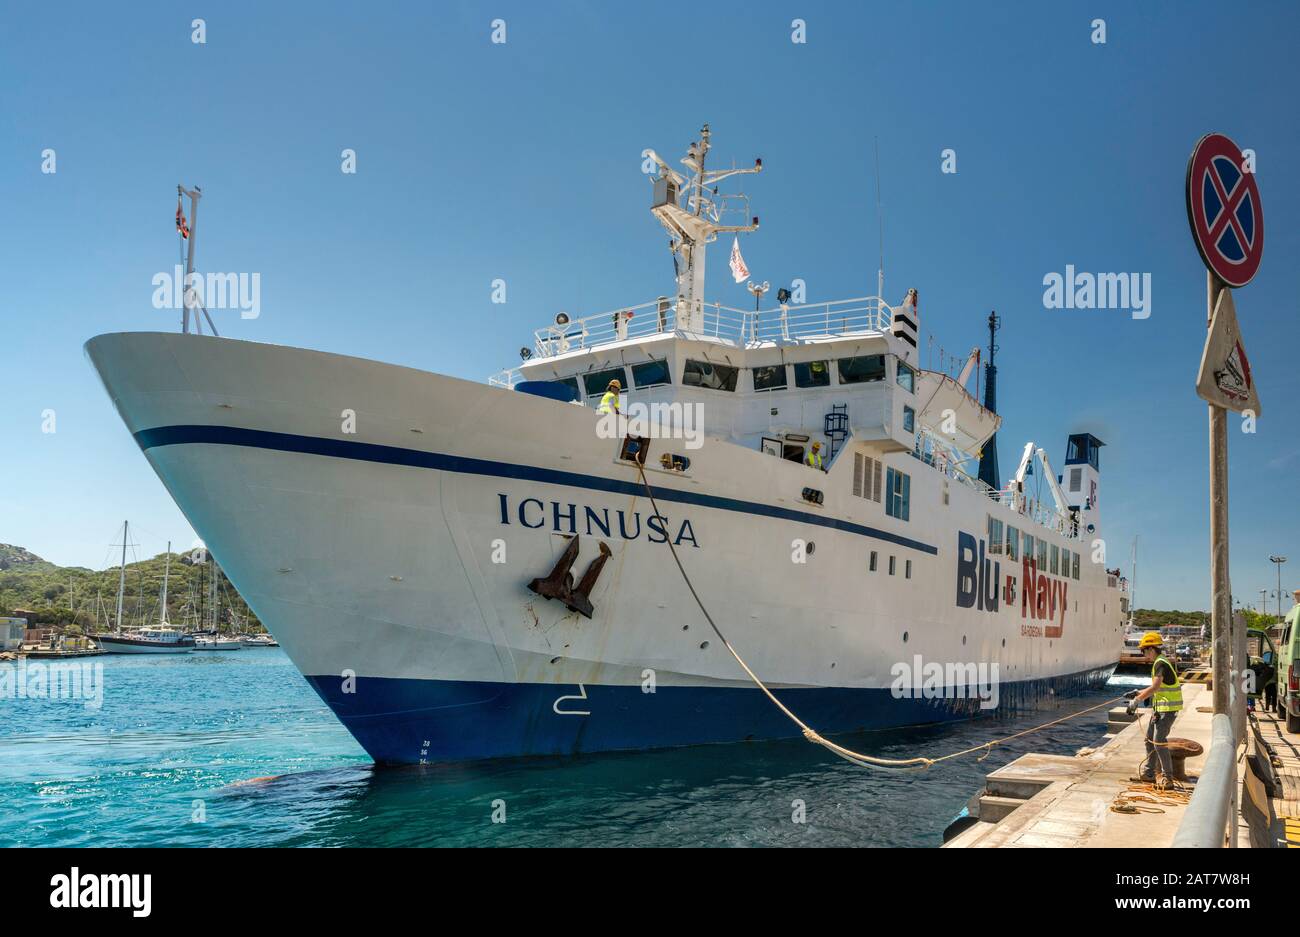 Mme Ichnusa, ferry BluNavy, amarre au terminal des ferries au port de Santa Teresa di Gallura, Sassari, Sardaigne, Italie Banque D'Images